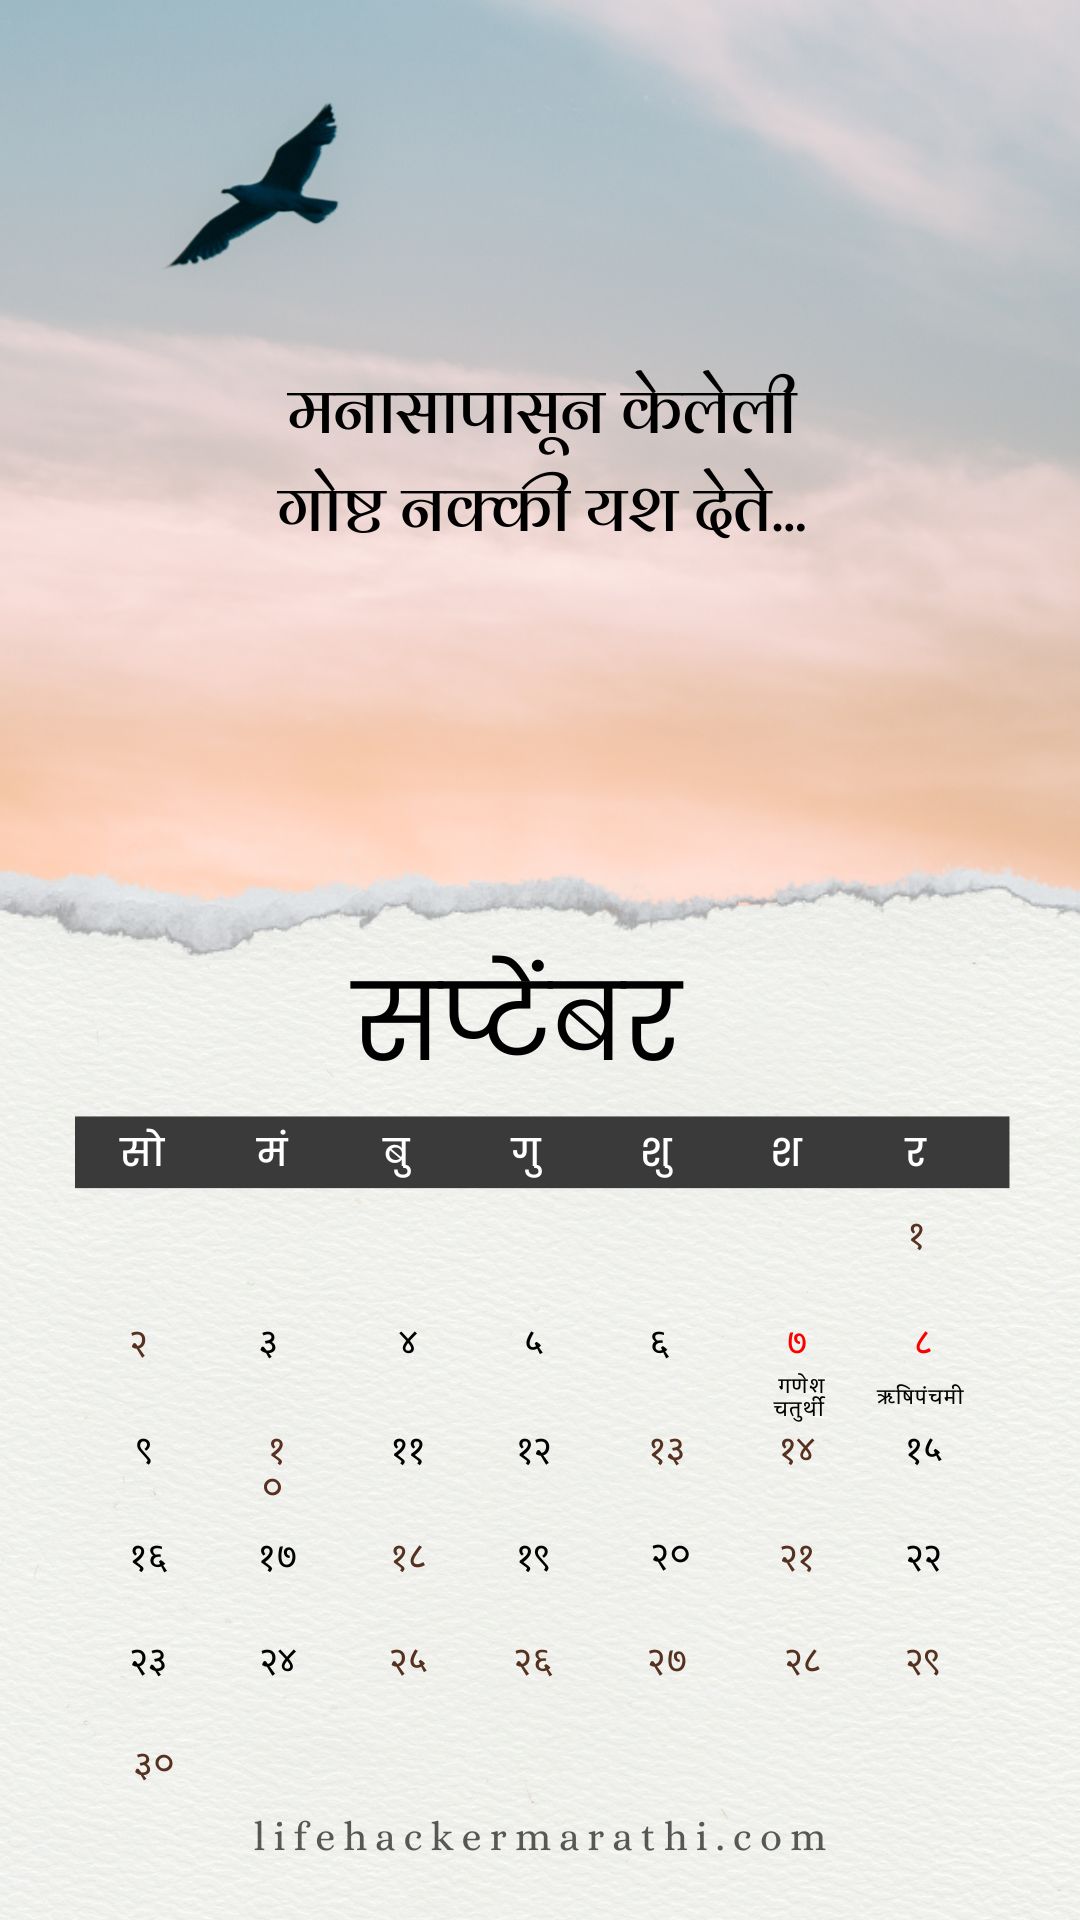 [PDF] 2024 Free Marathi Calender २०२४ मराठी कैलेंडर Lifehacker Marathi